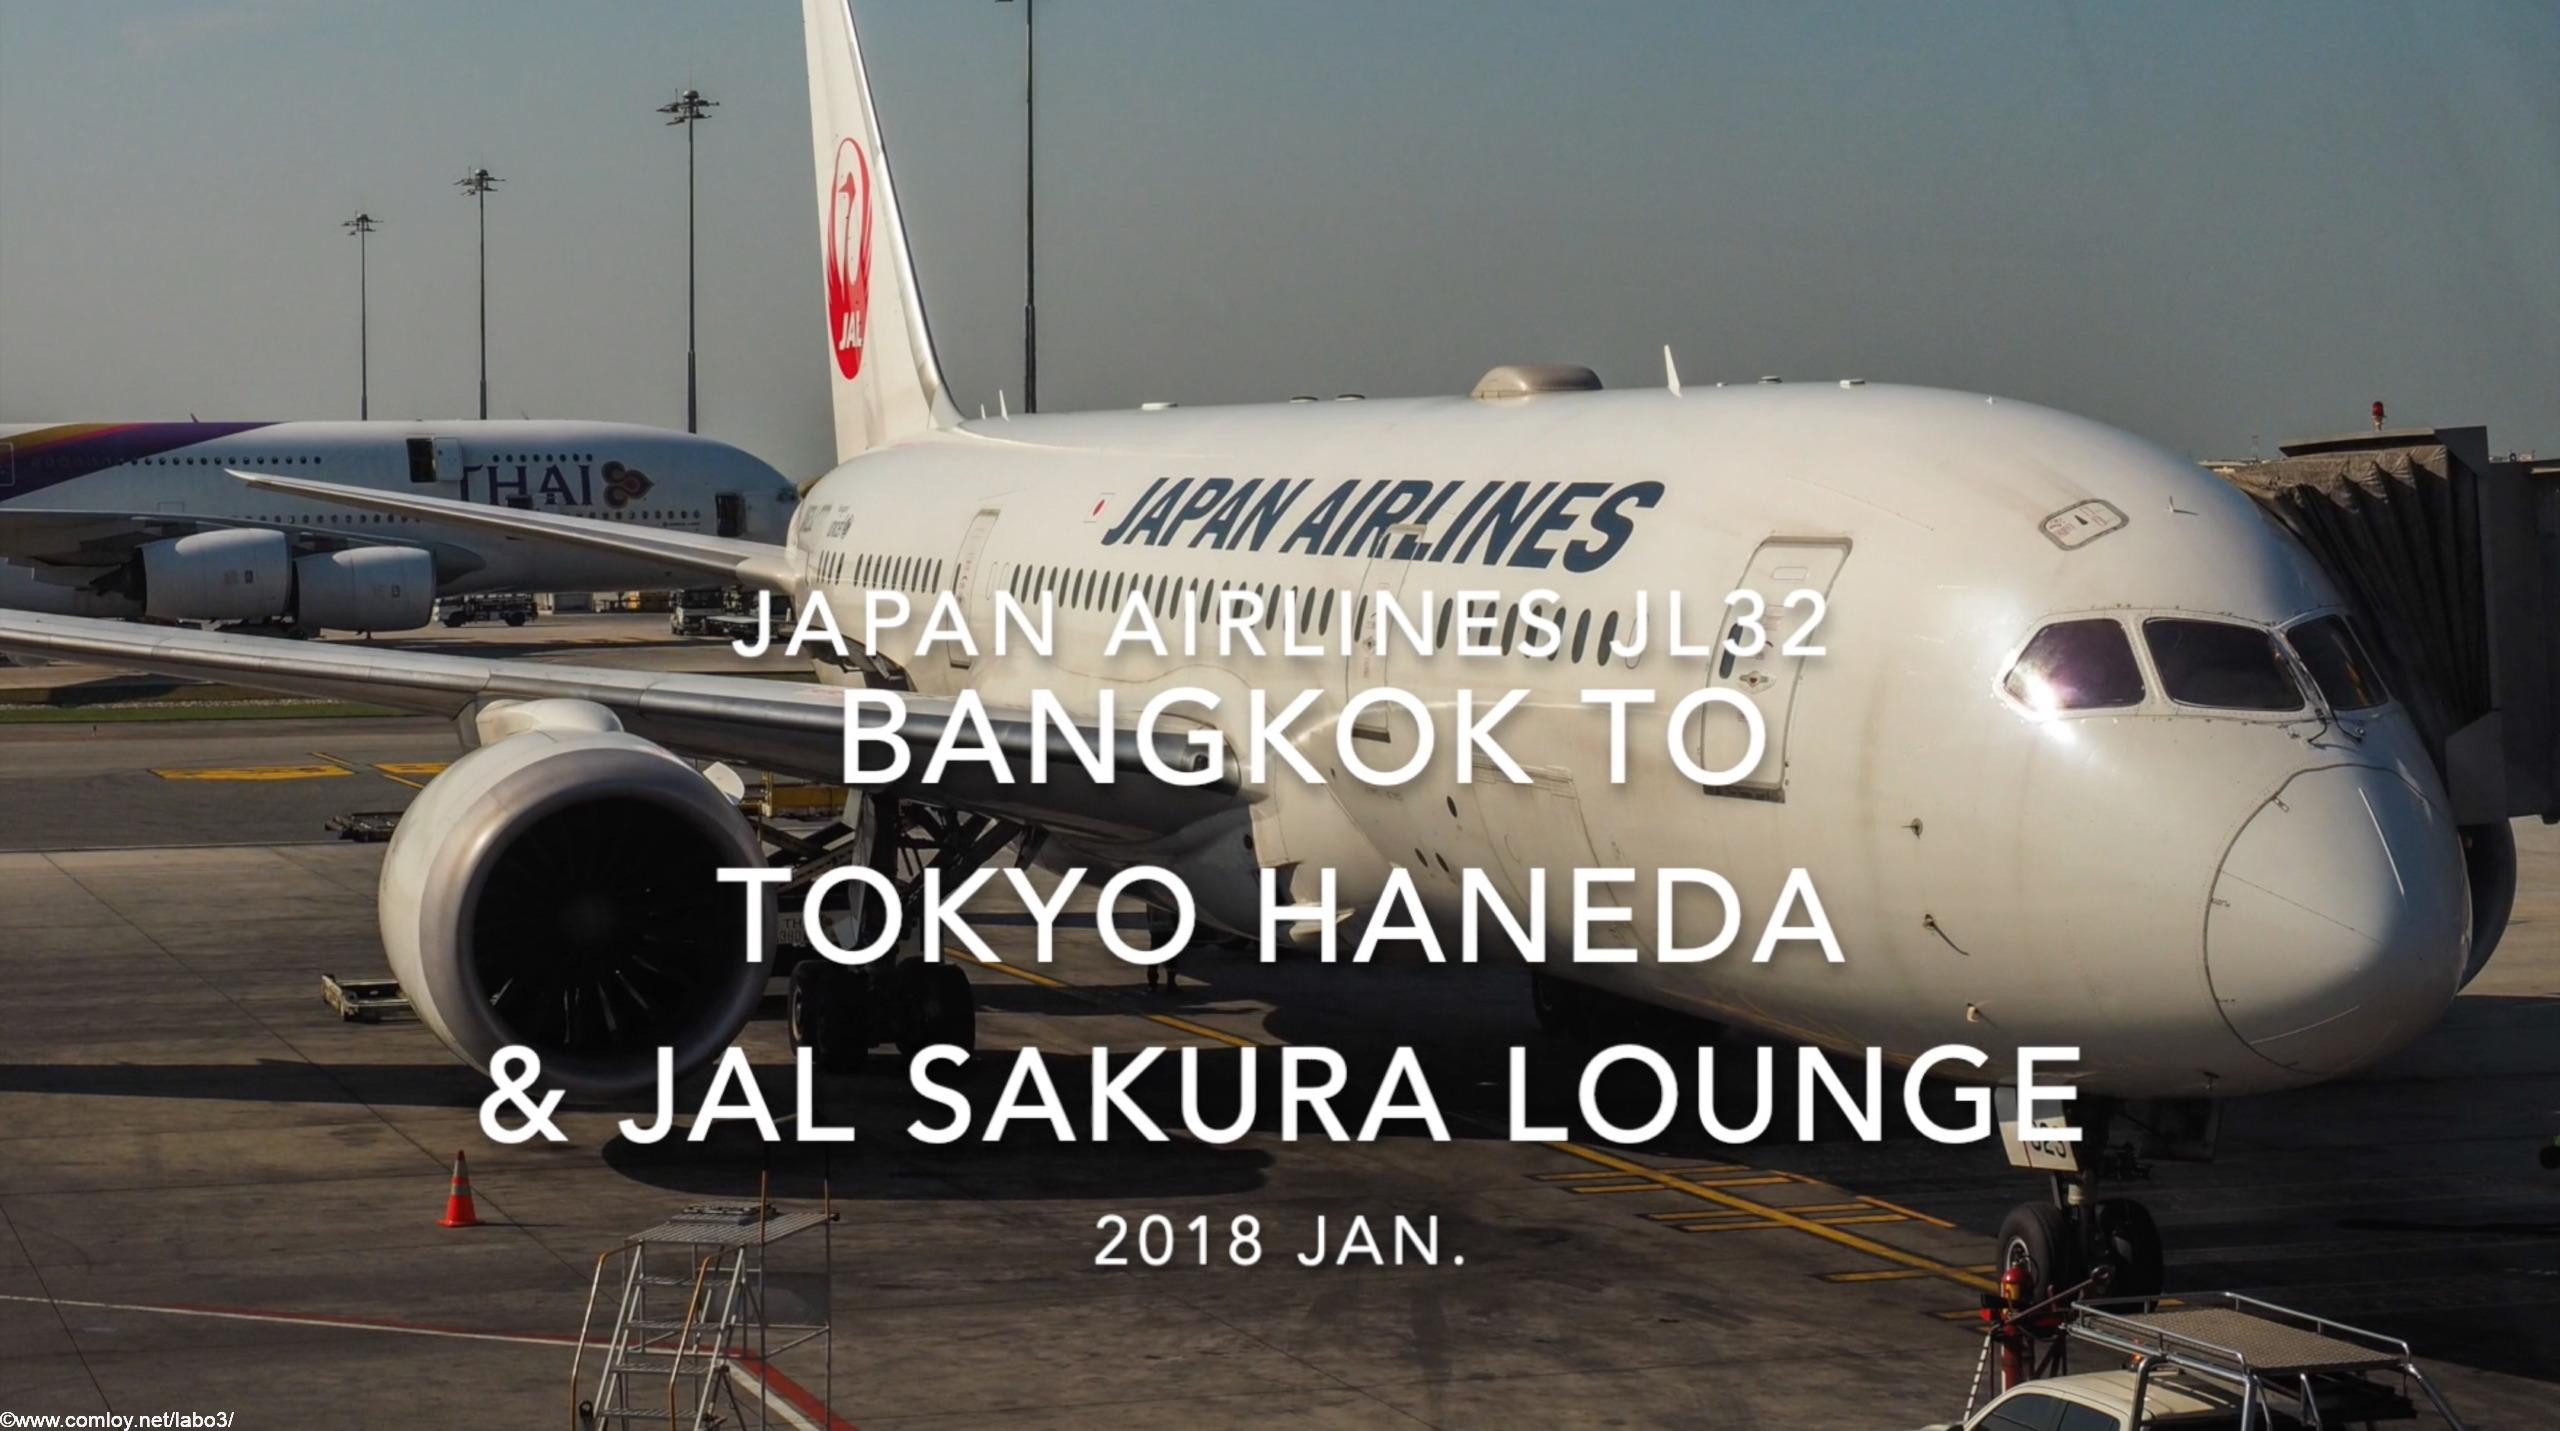 【Flight Report】2018 Jan Japan Airlines JL32 Bangkok to TOKYO HANEDA 日本航空 バンコク - 羽田 搭乗記